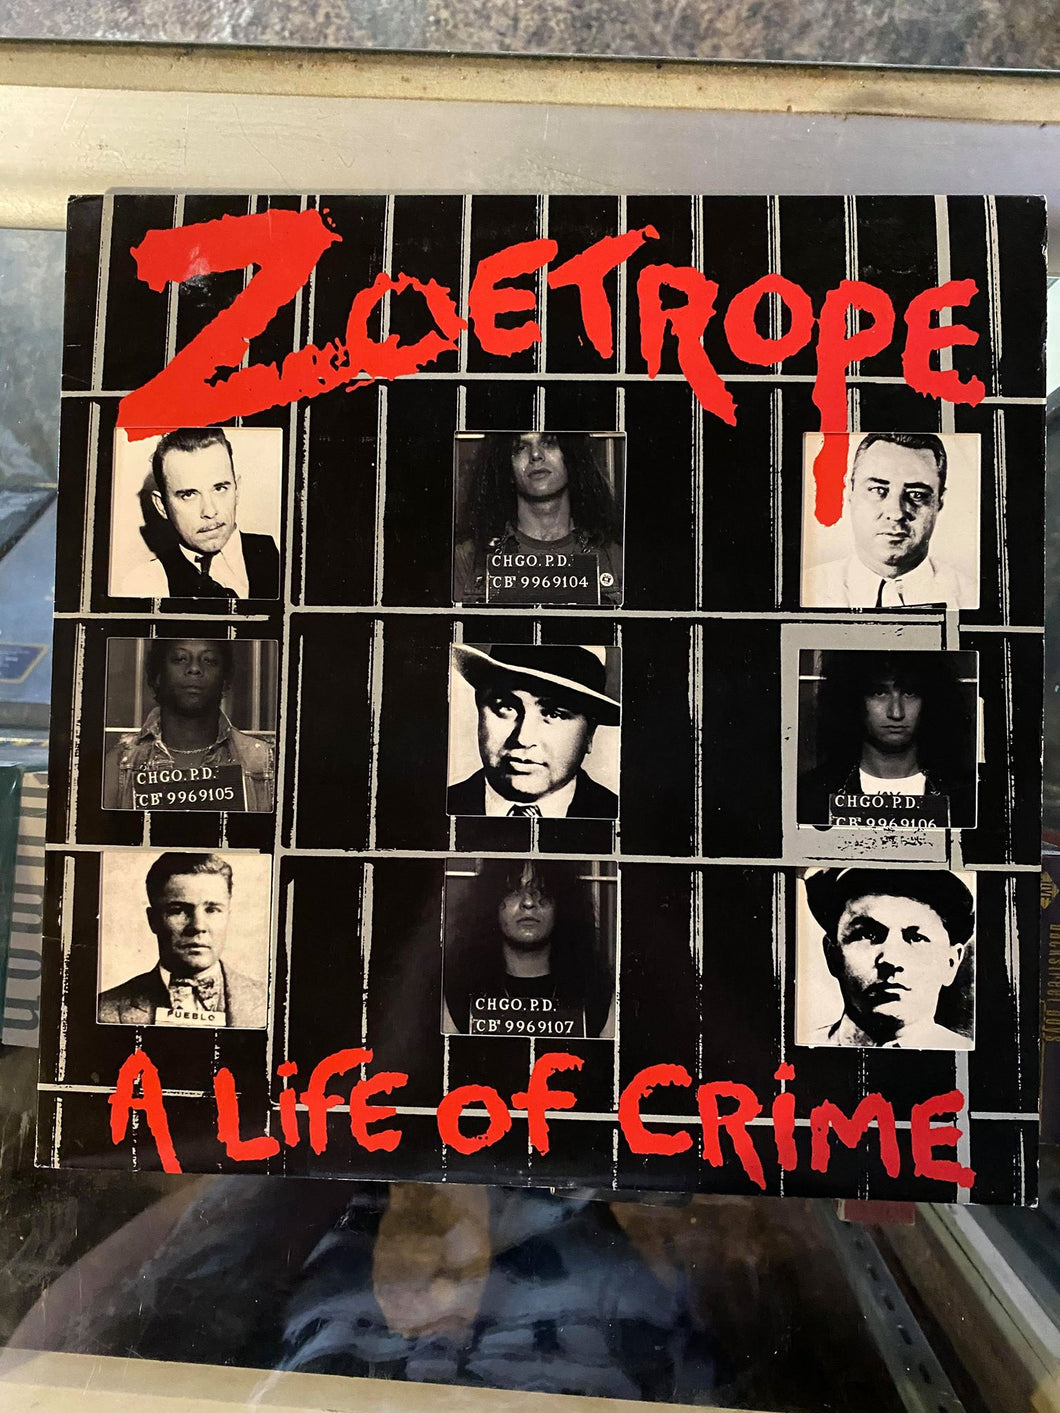 Zoetrope - A Life of Crime